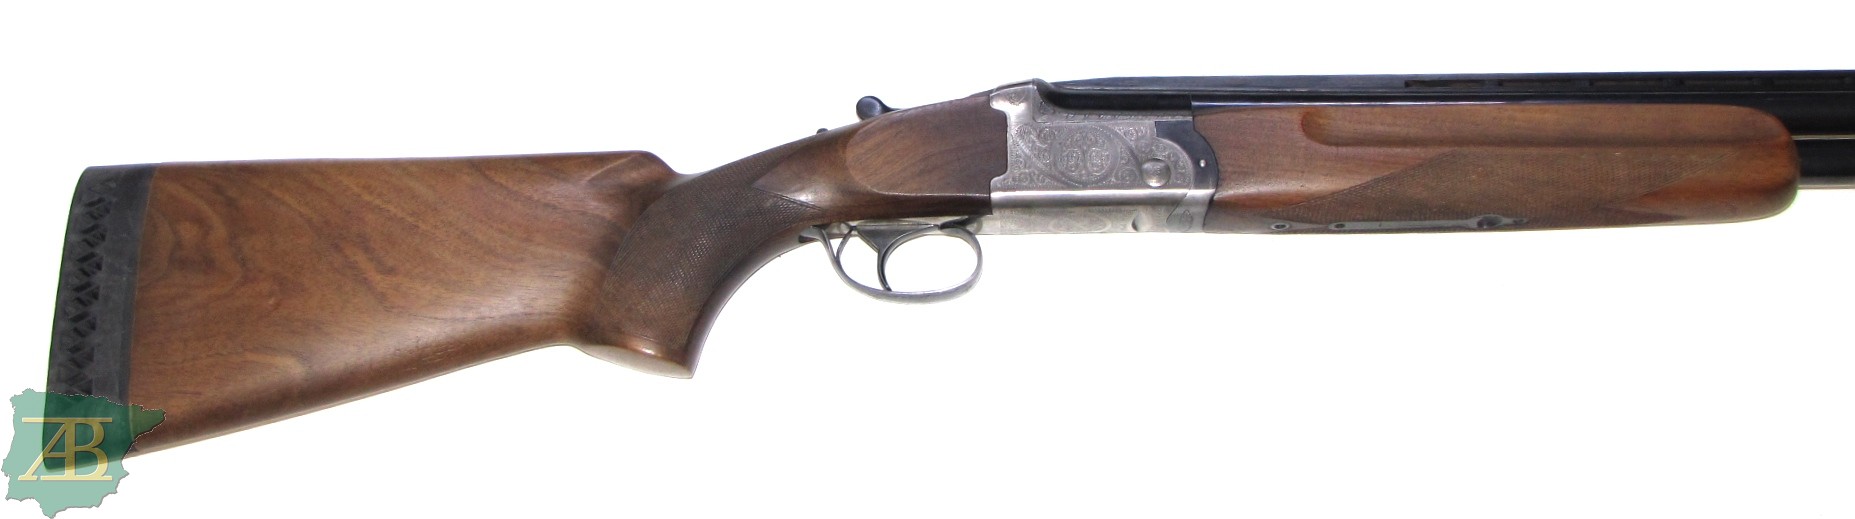 Escopeta superpuesta de TRAP COUNTY Ref 7506-armeriaiberica-2